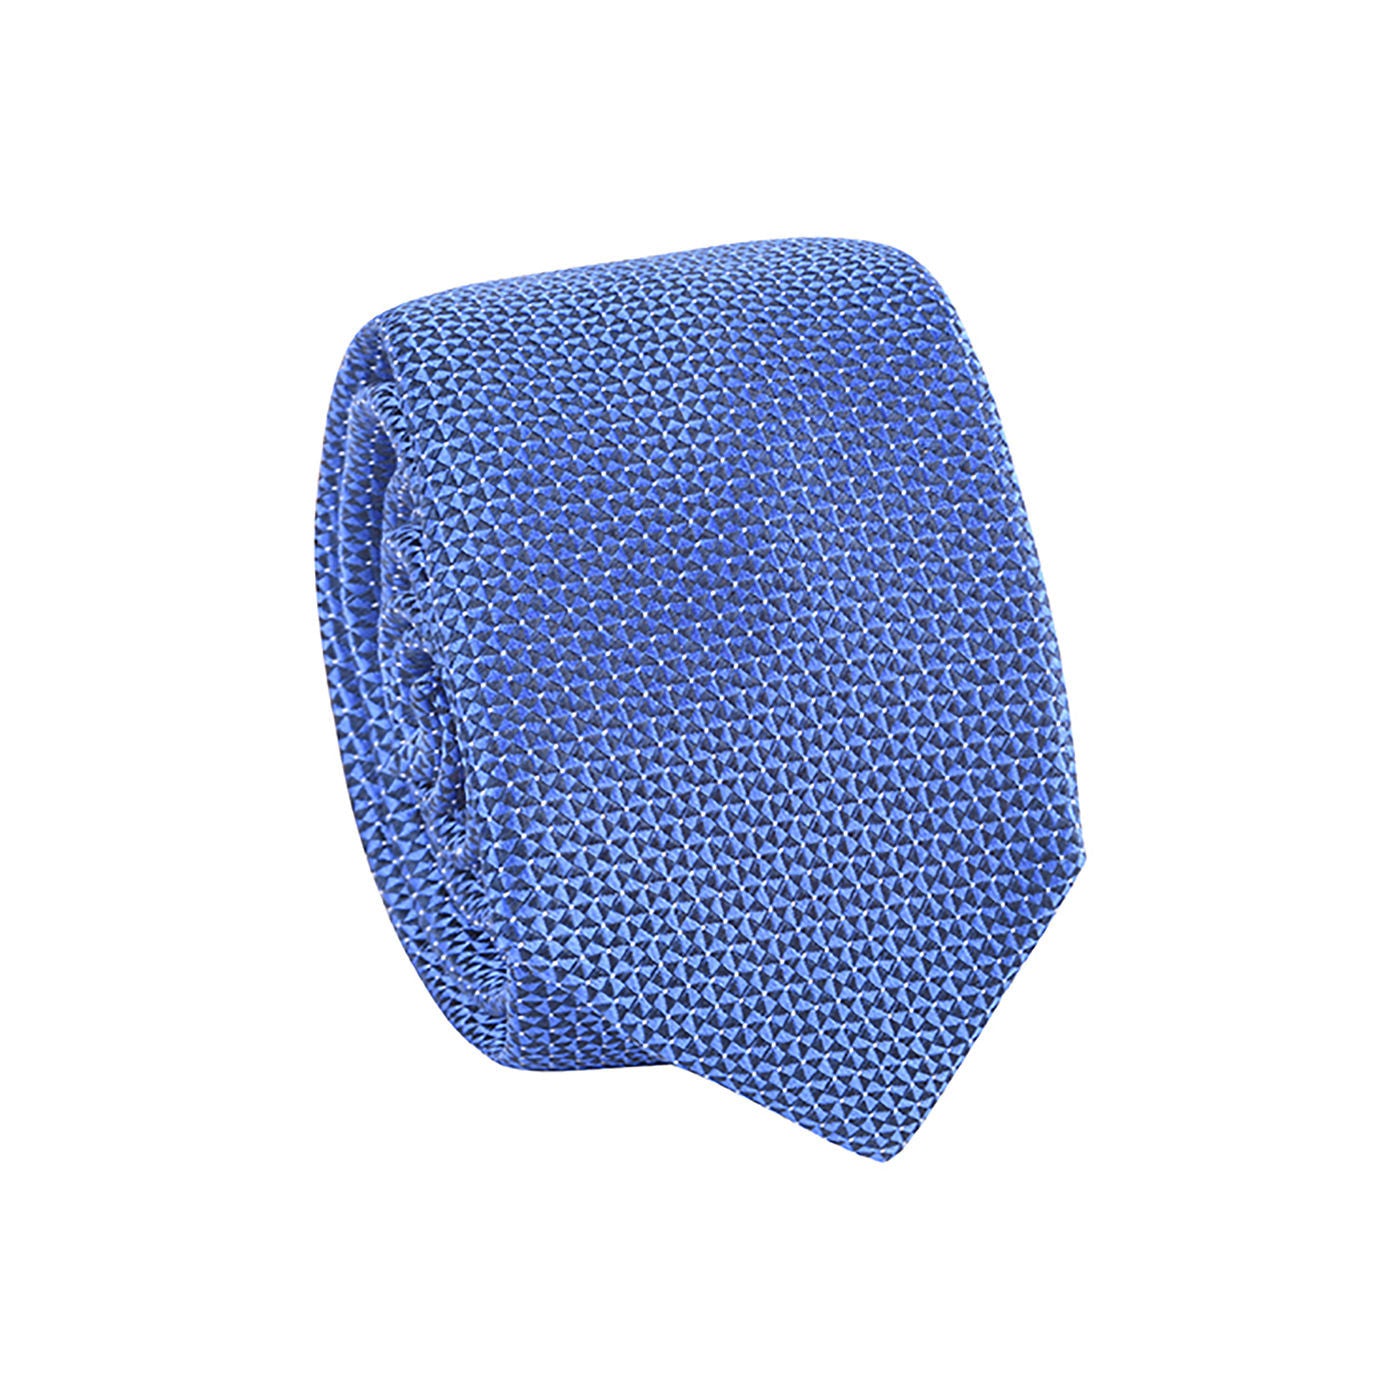 Cravate homme imprimé triangle Bleu royal / Bleu marine